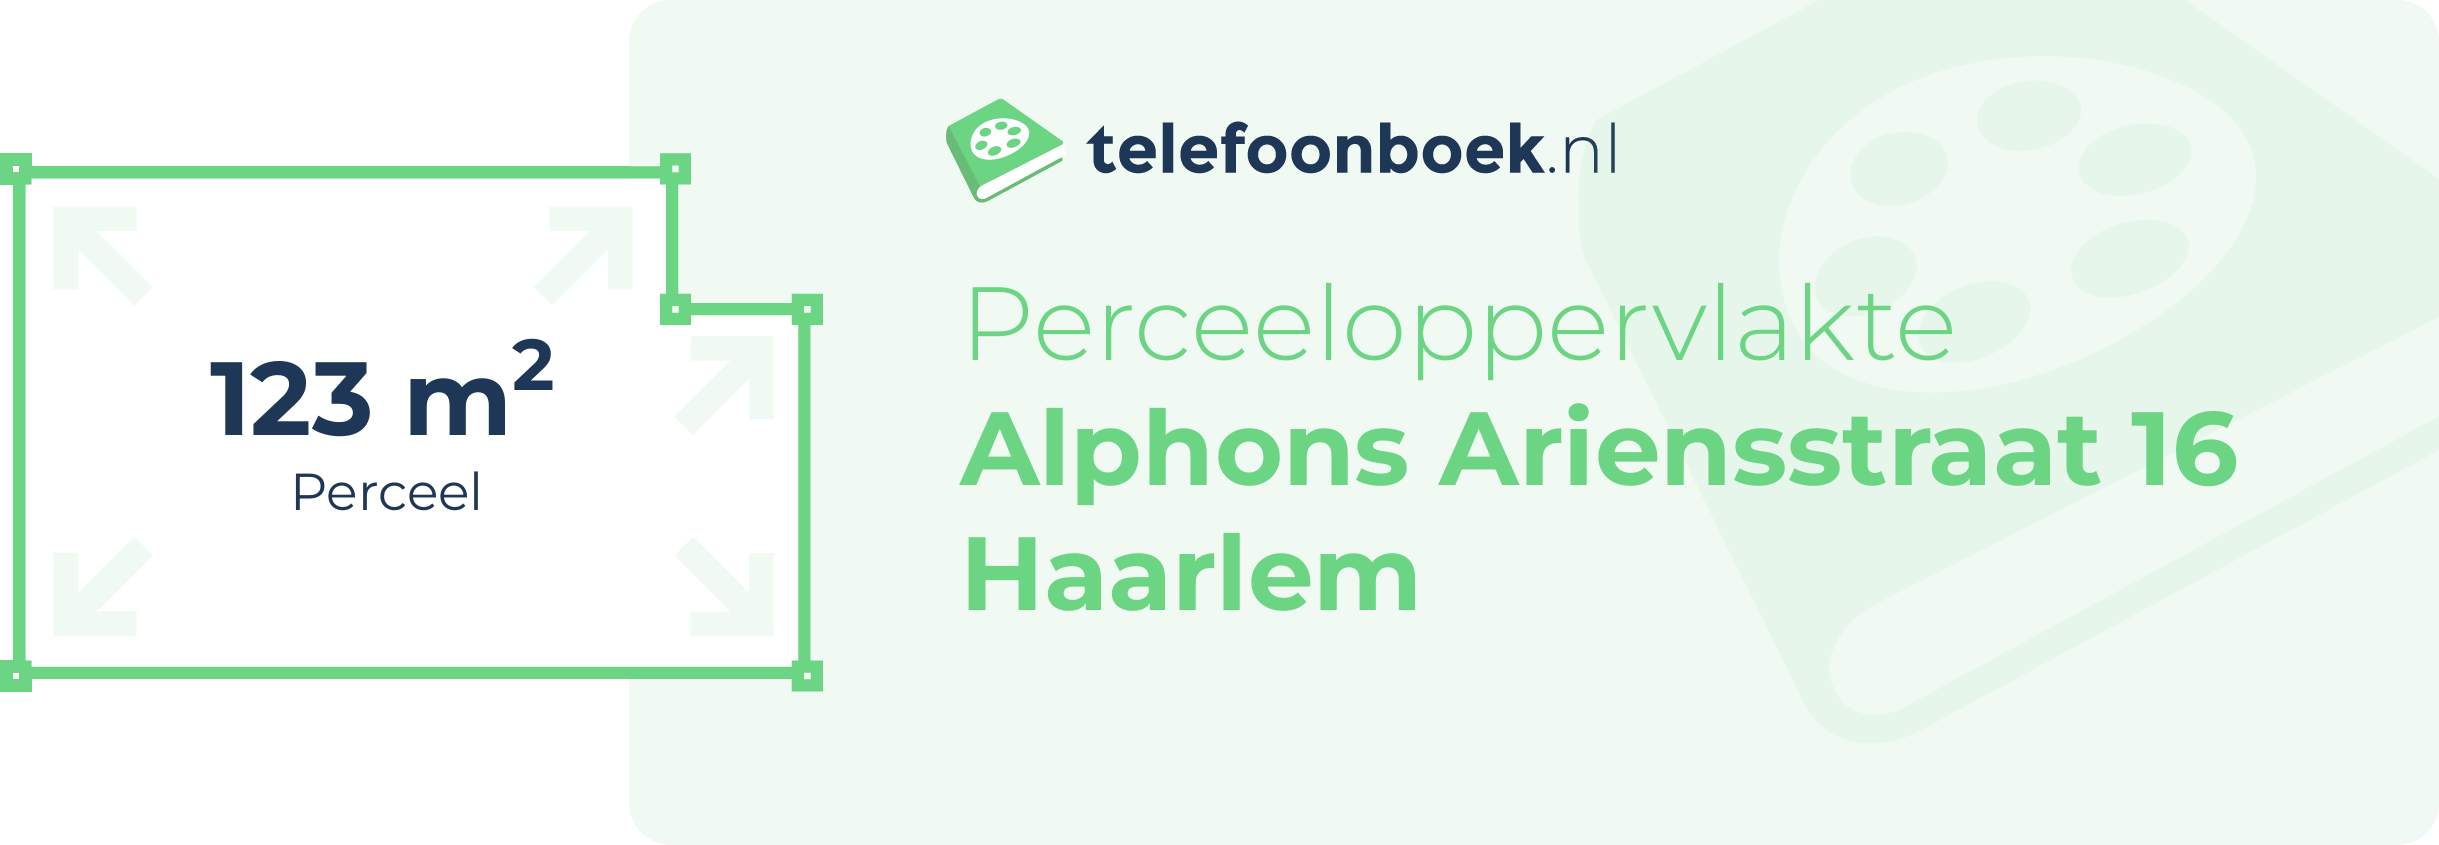 Perceeloppervlakte Alphons Ariensstraat 16 Haarlem